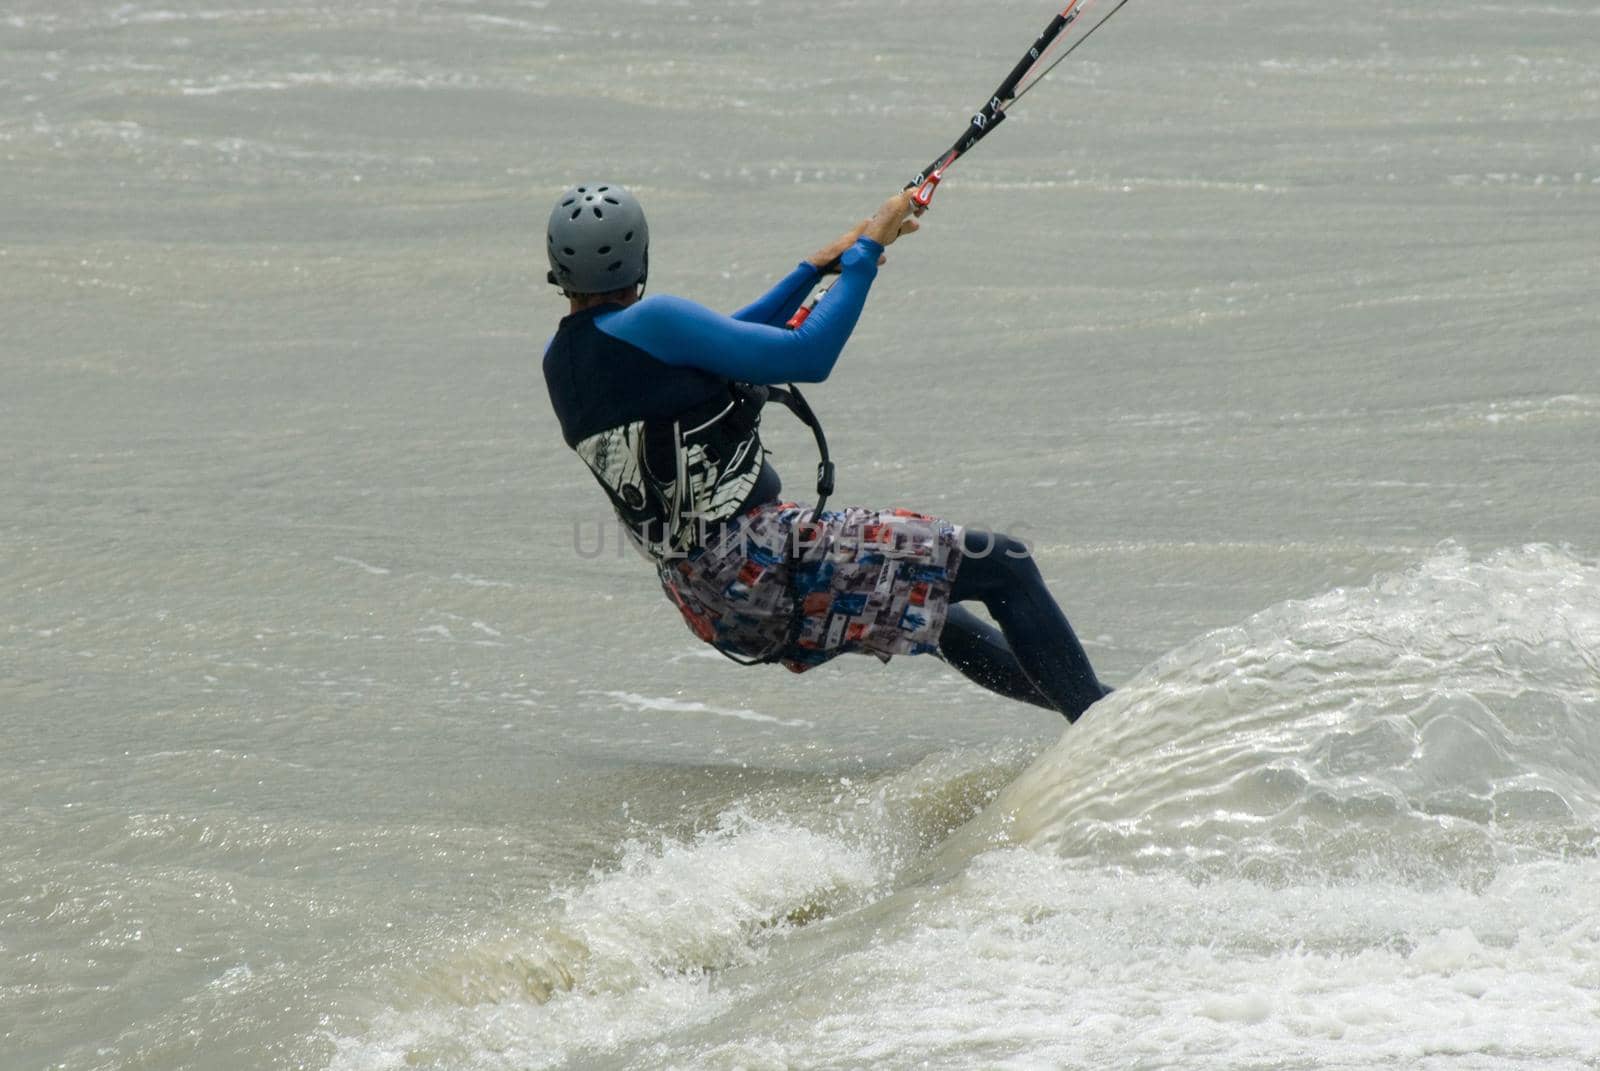 a kitesurfer screaming through the water